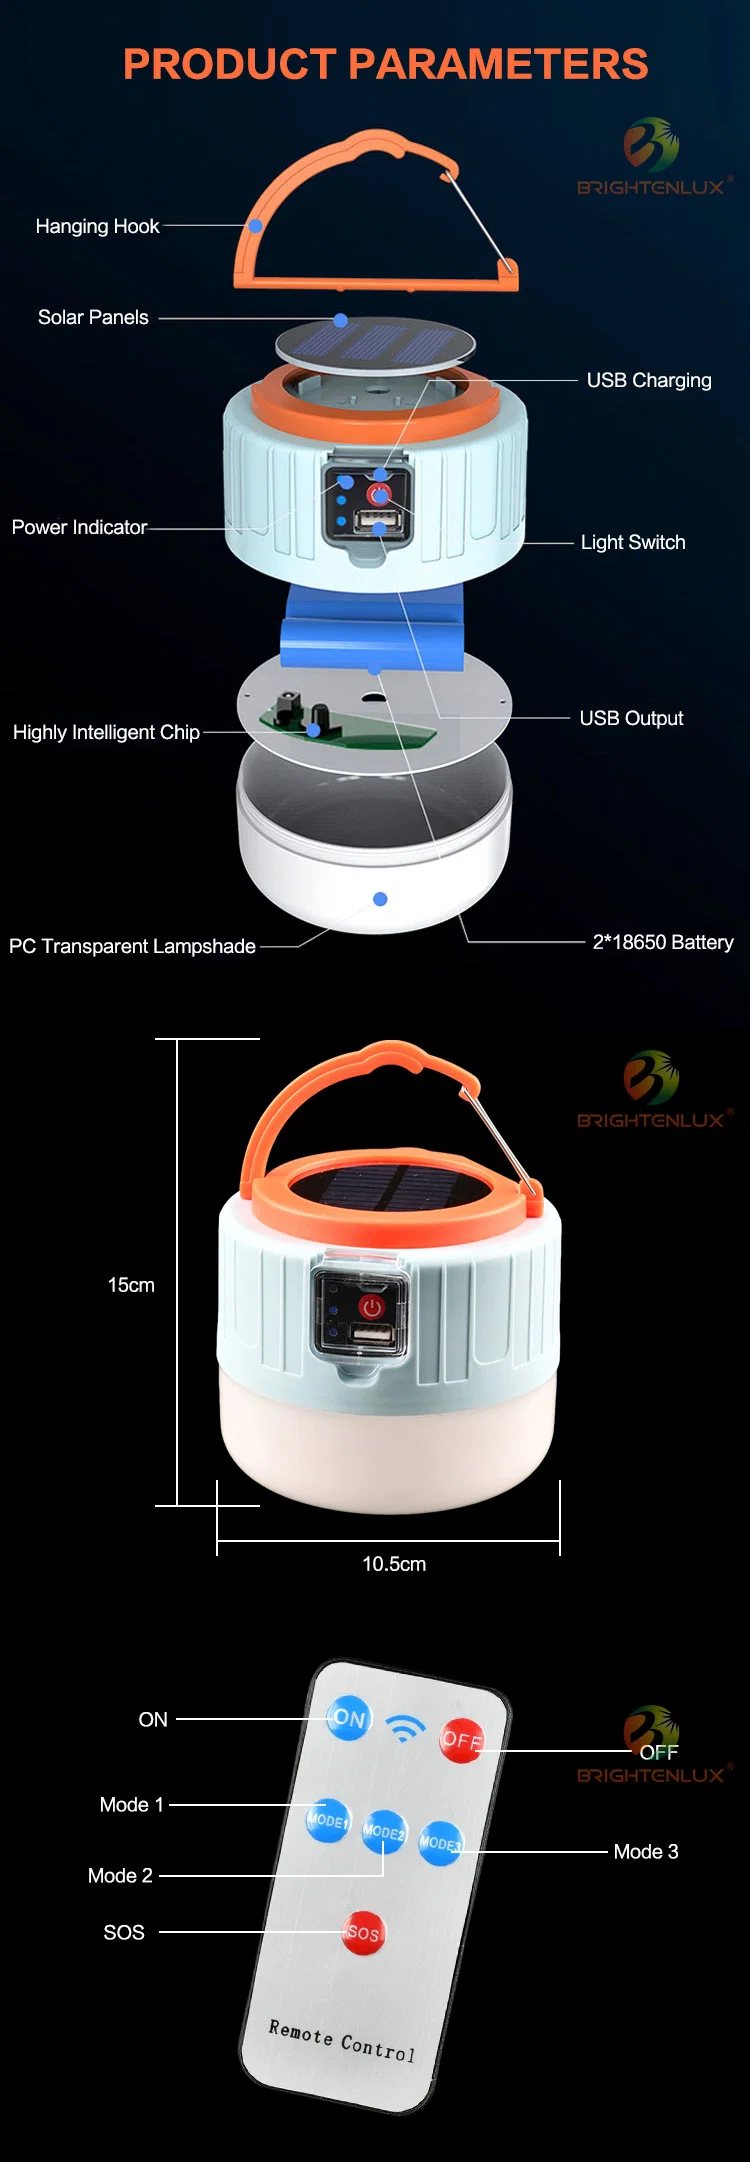 Brightenlux Remote Control Solar Charging Camping Lantern Manufacturers